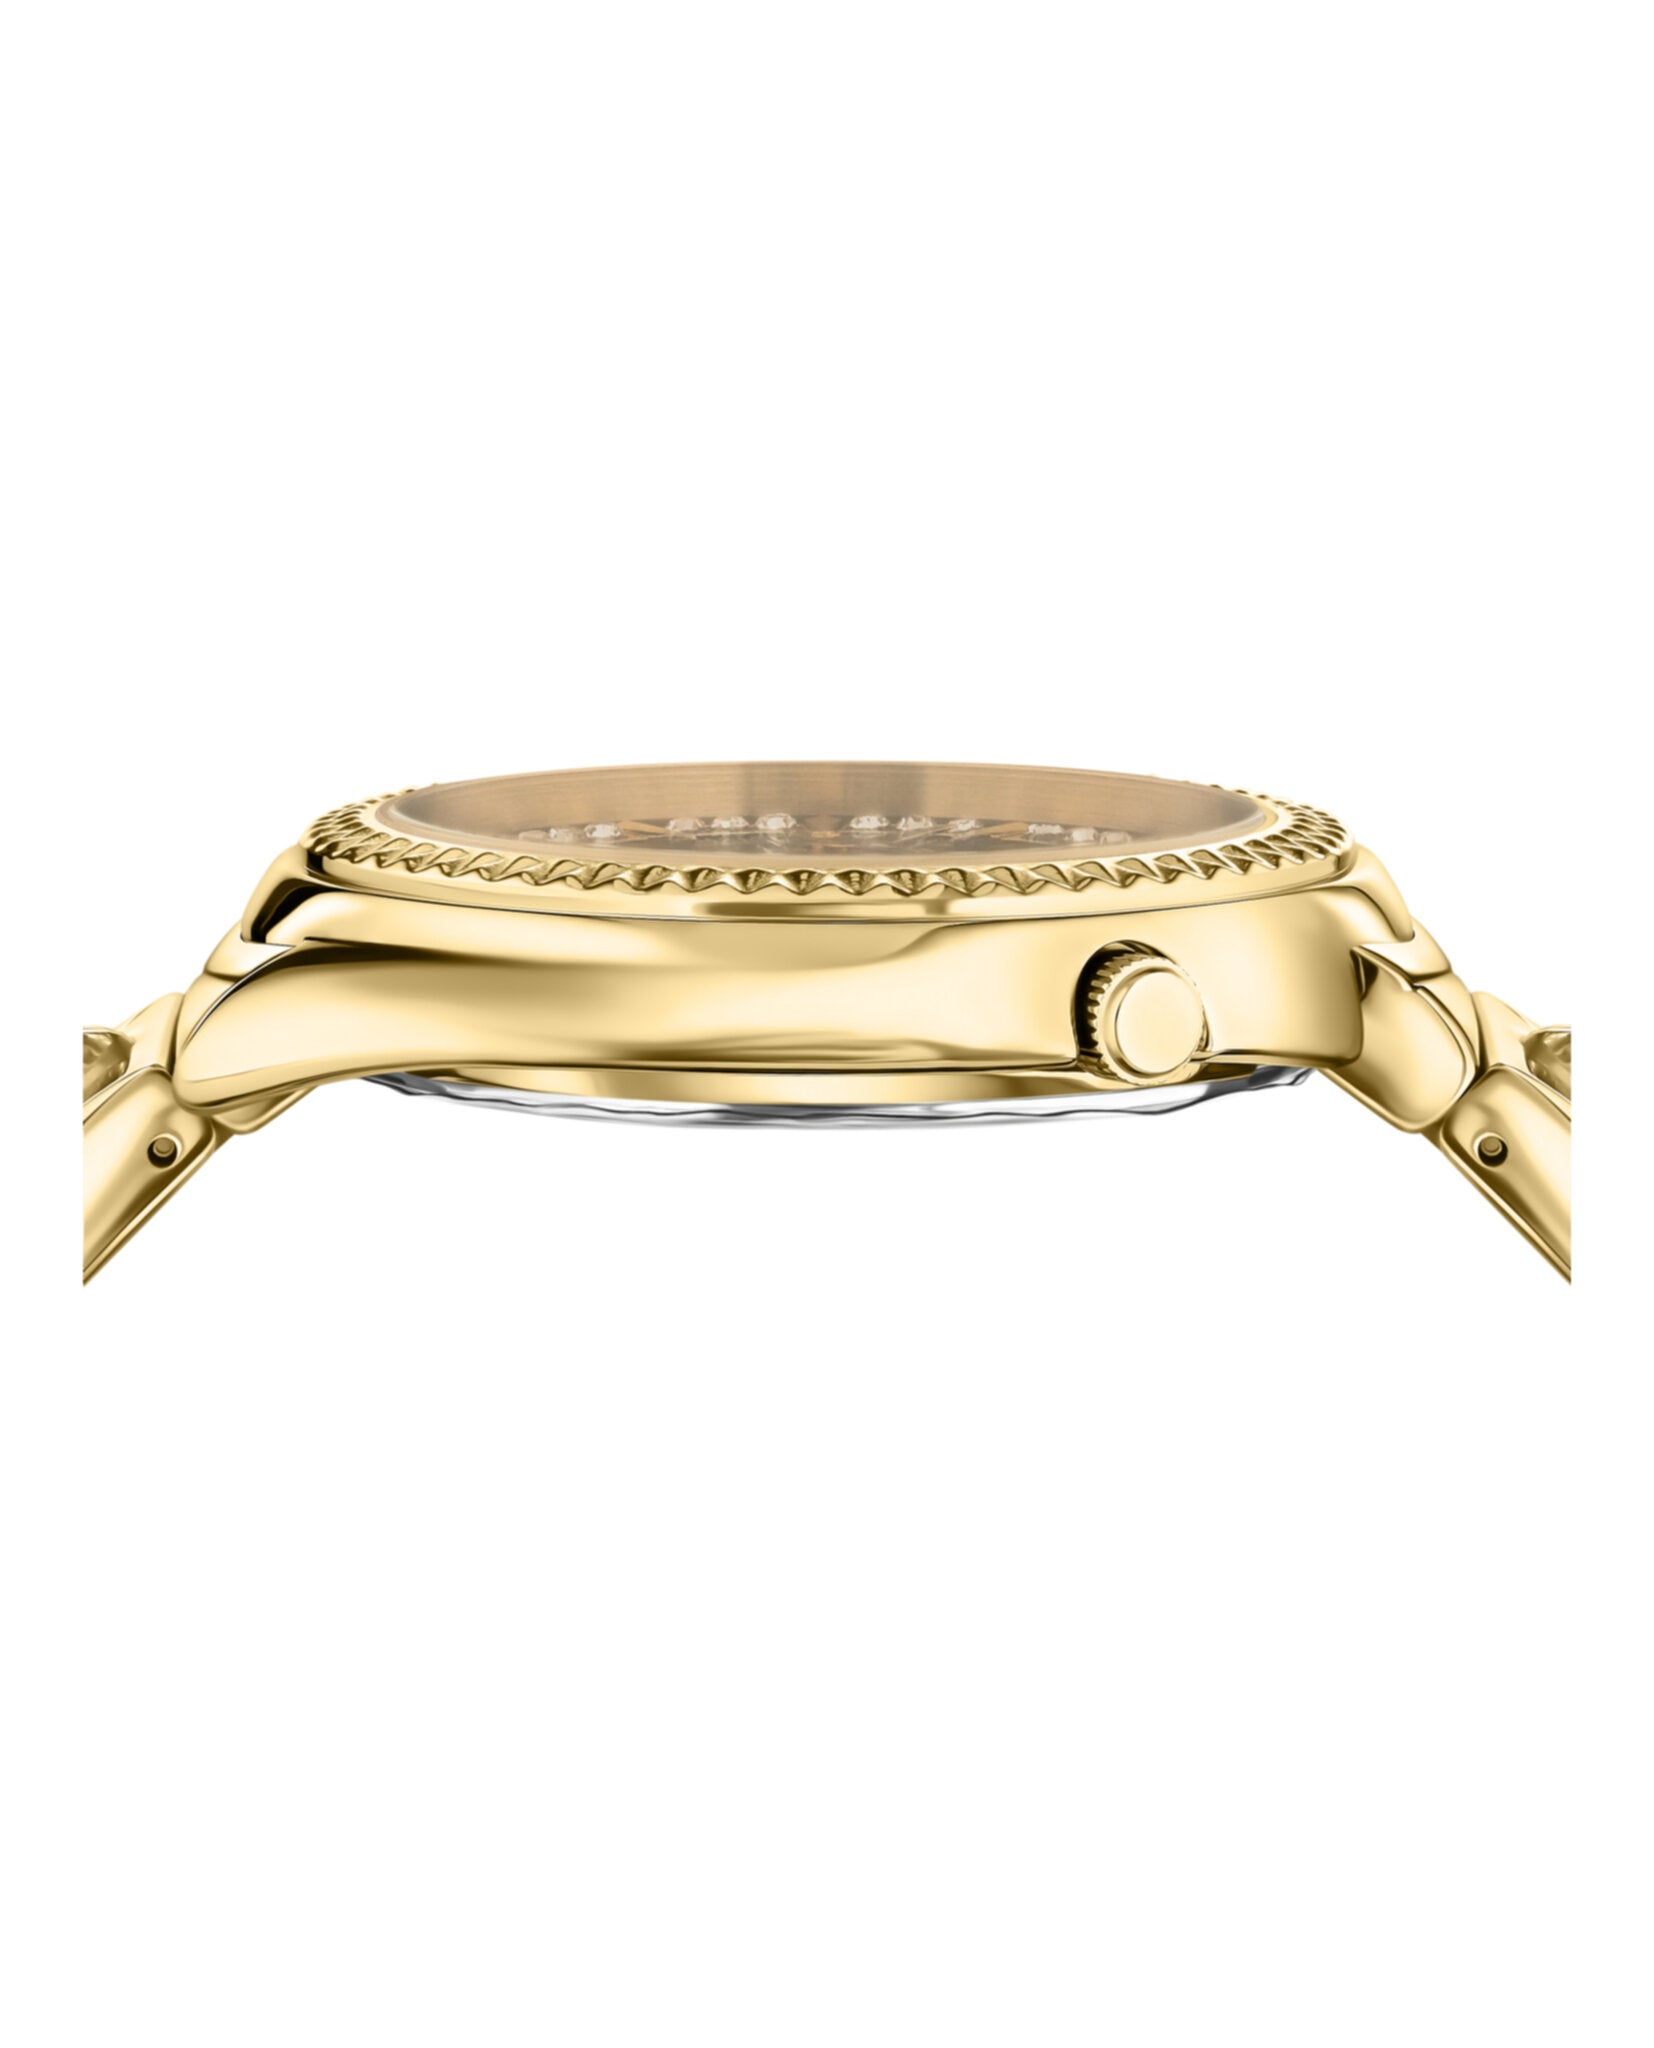 Tortona Crystal Bracelet Watch